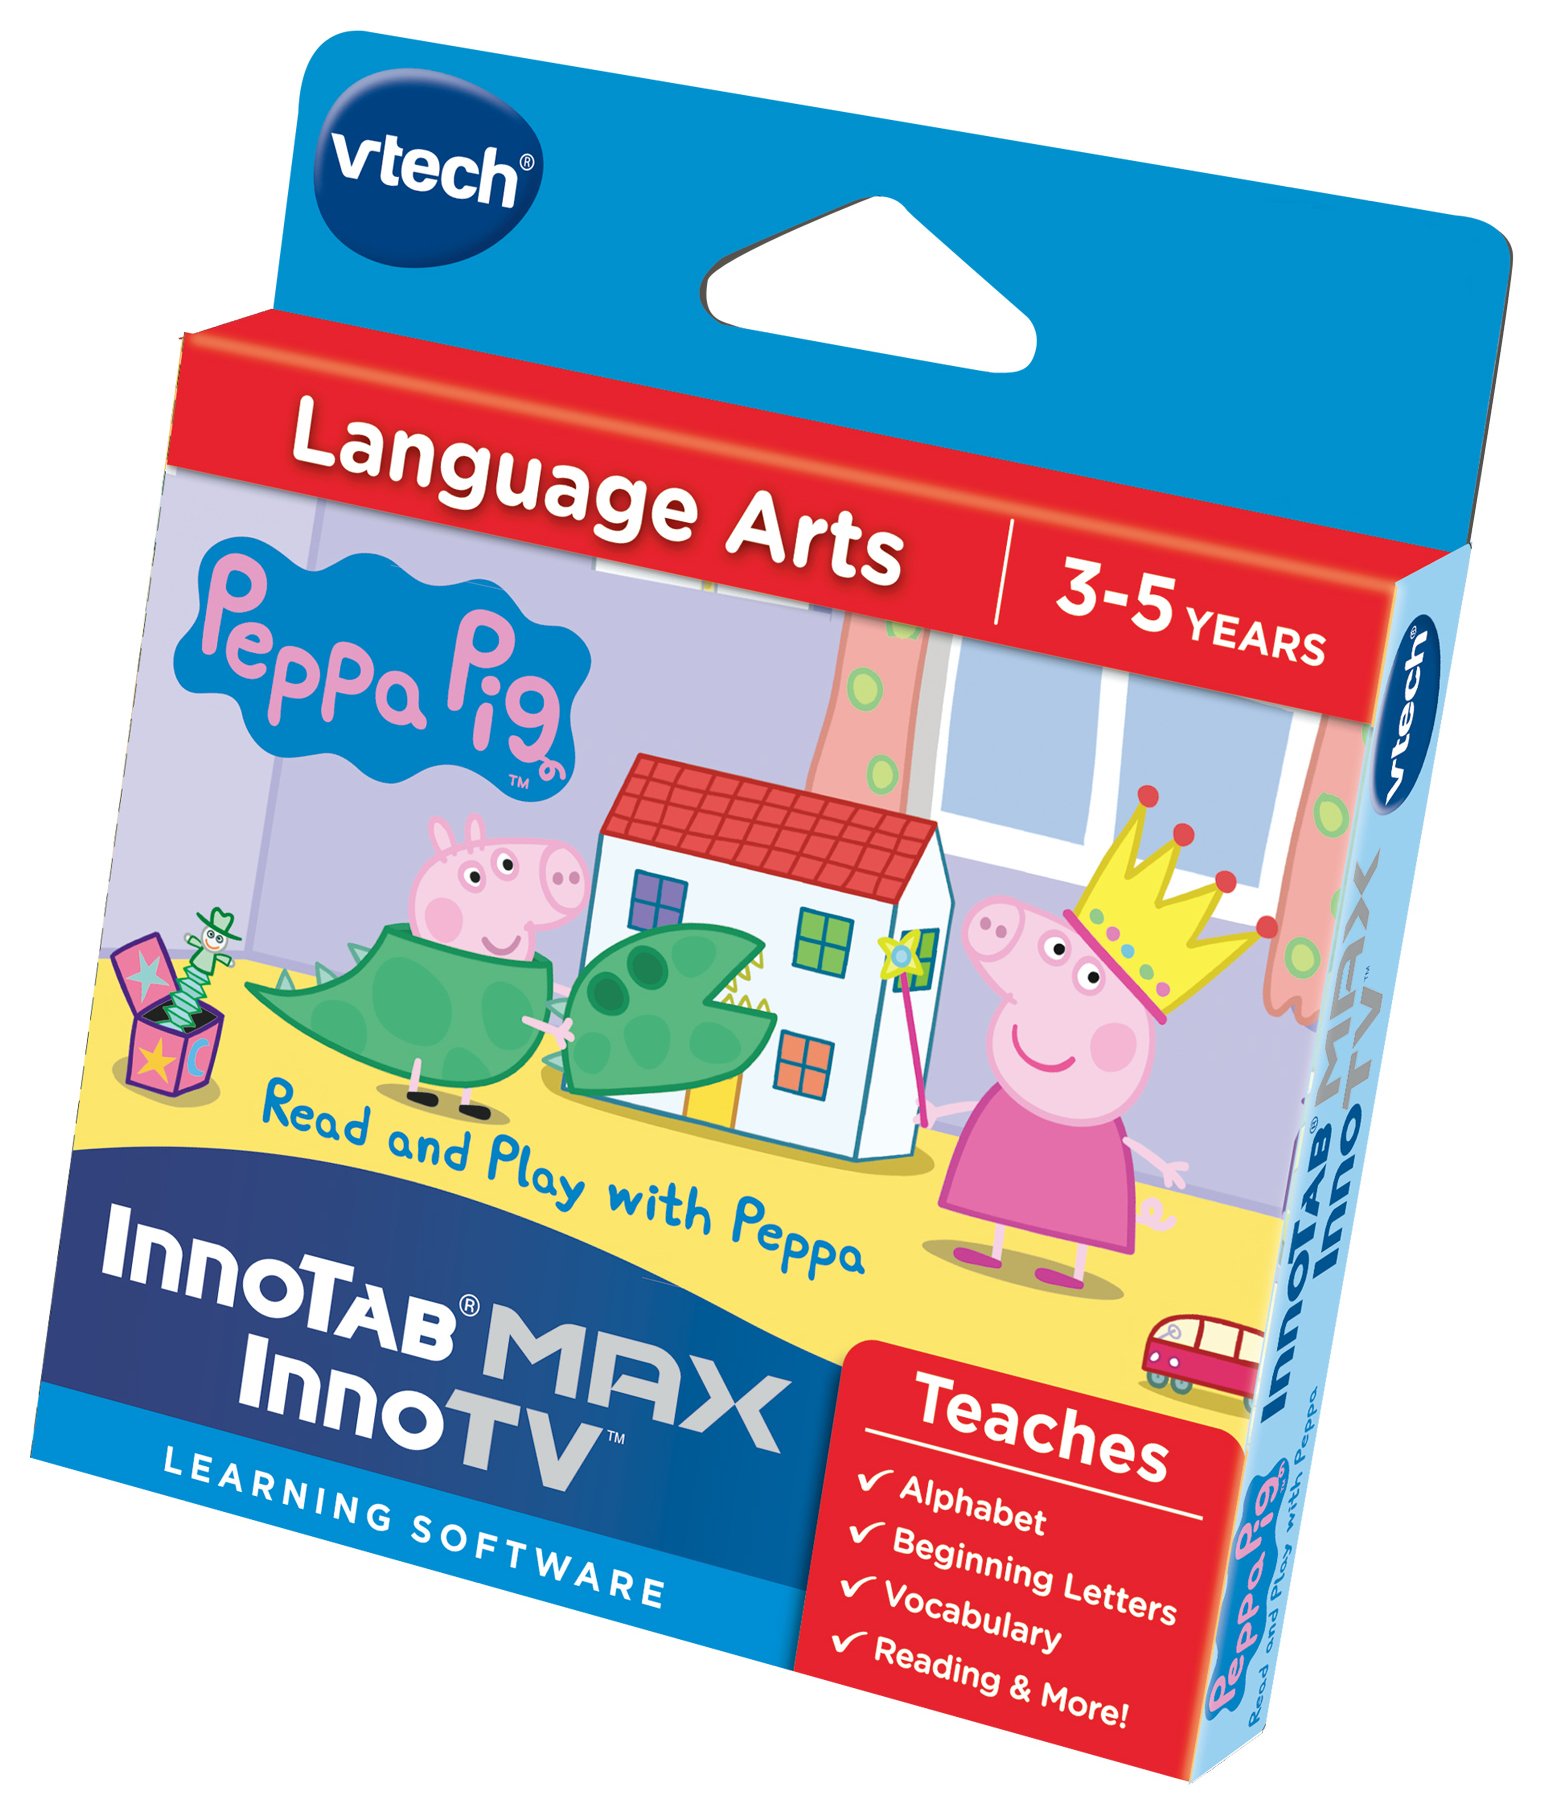 VTech InnoTab Software - Peppa Pig